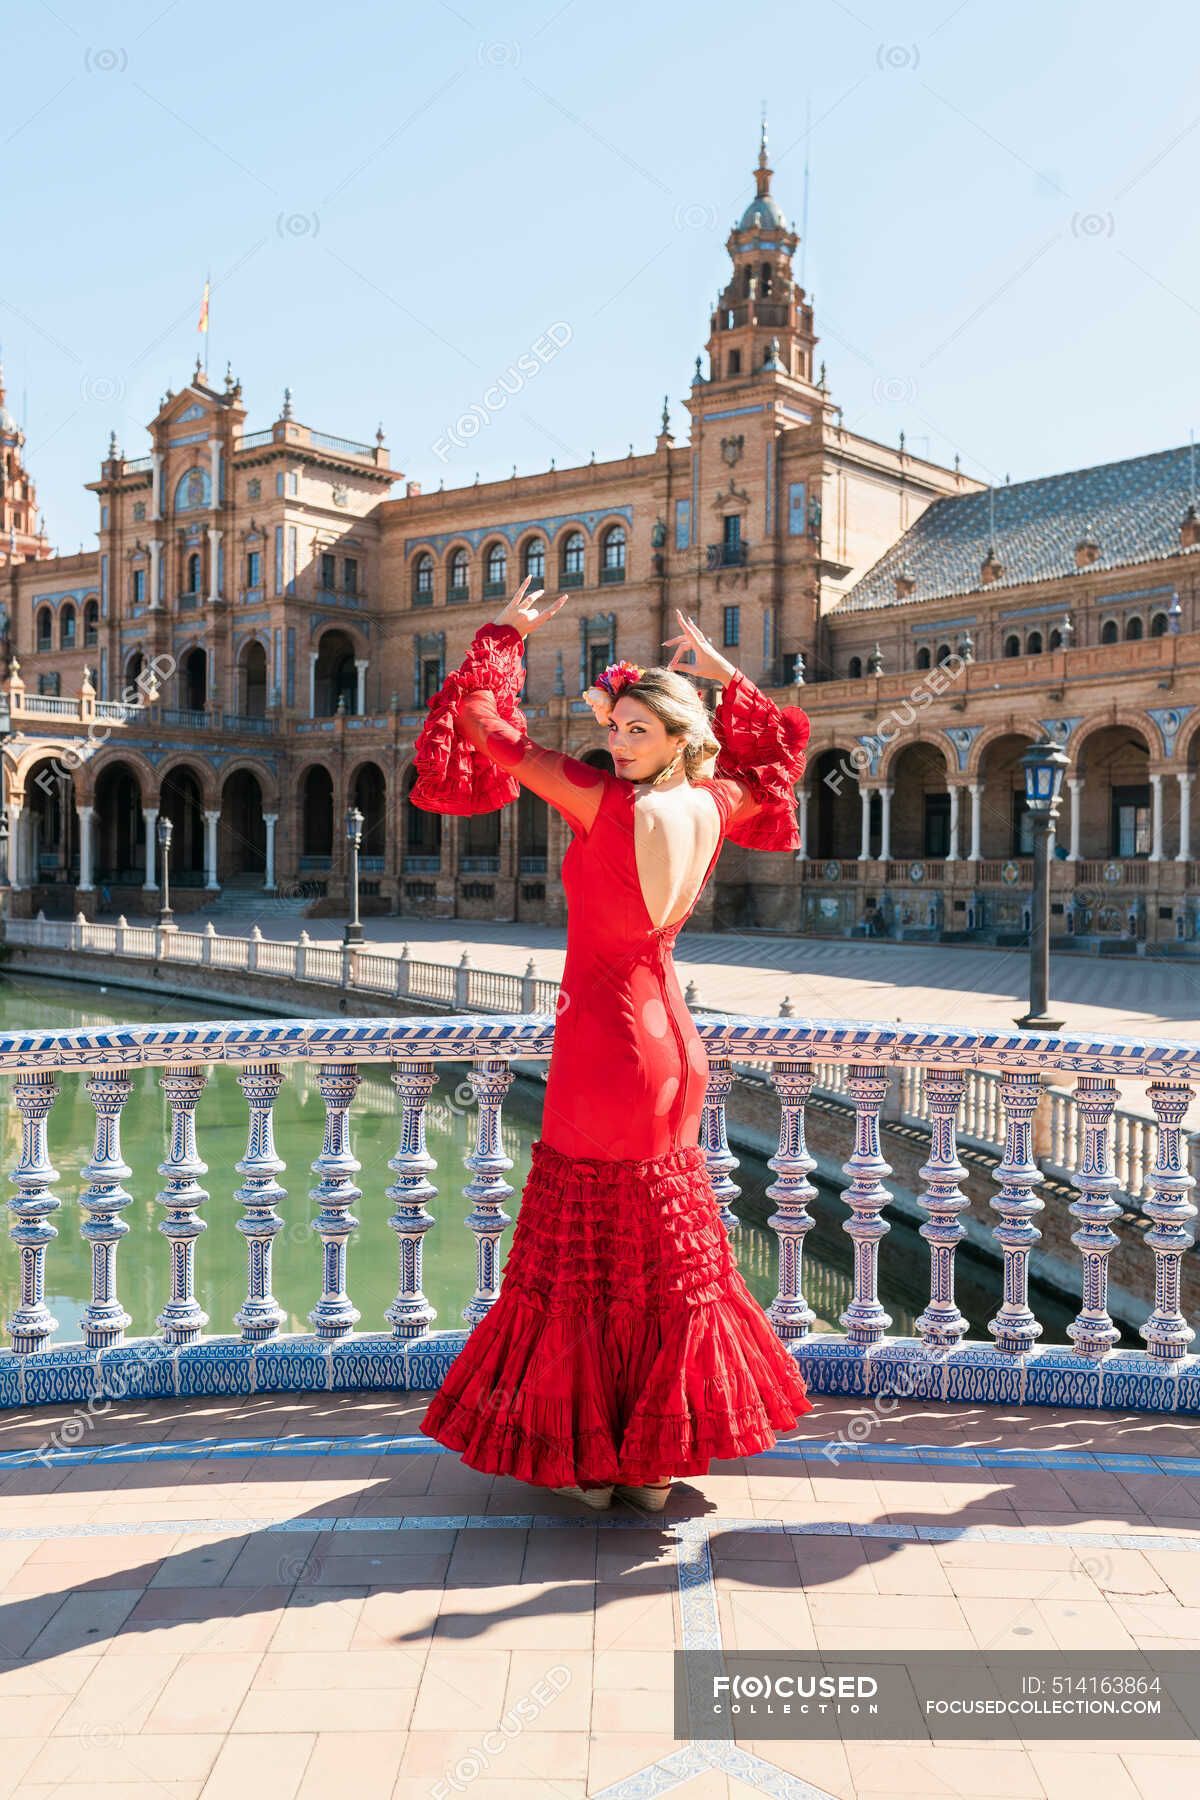 female-flamenco-dancer-dancing-with-hands-raised-at-plaza-de-espana-in